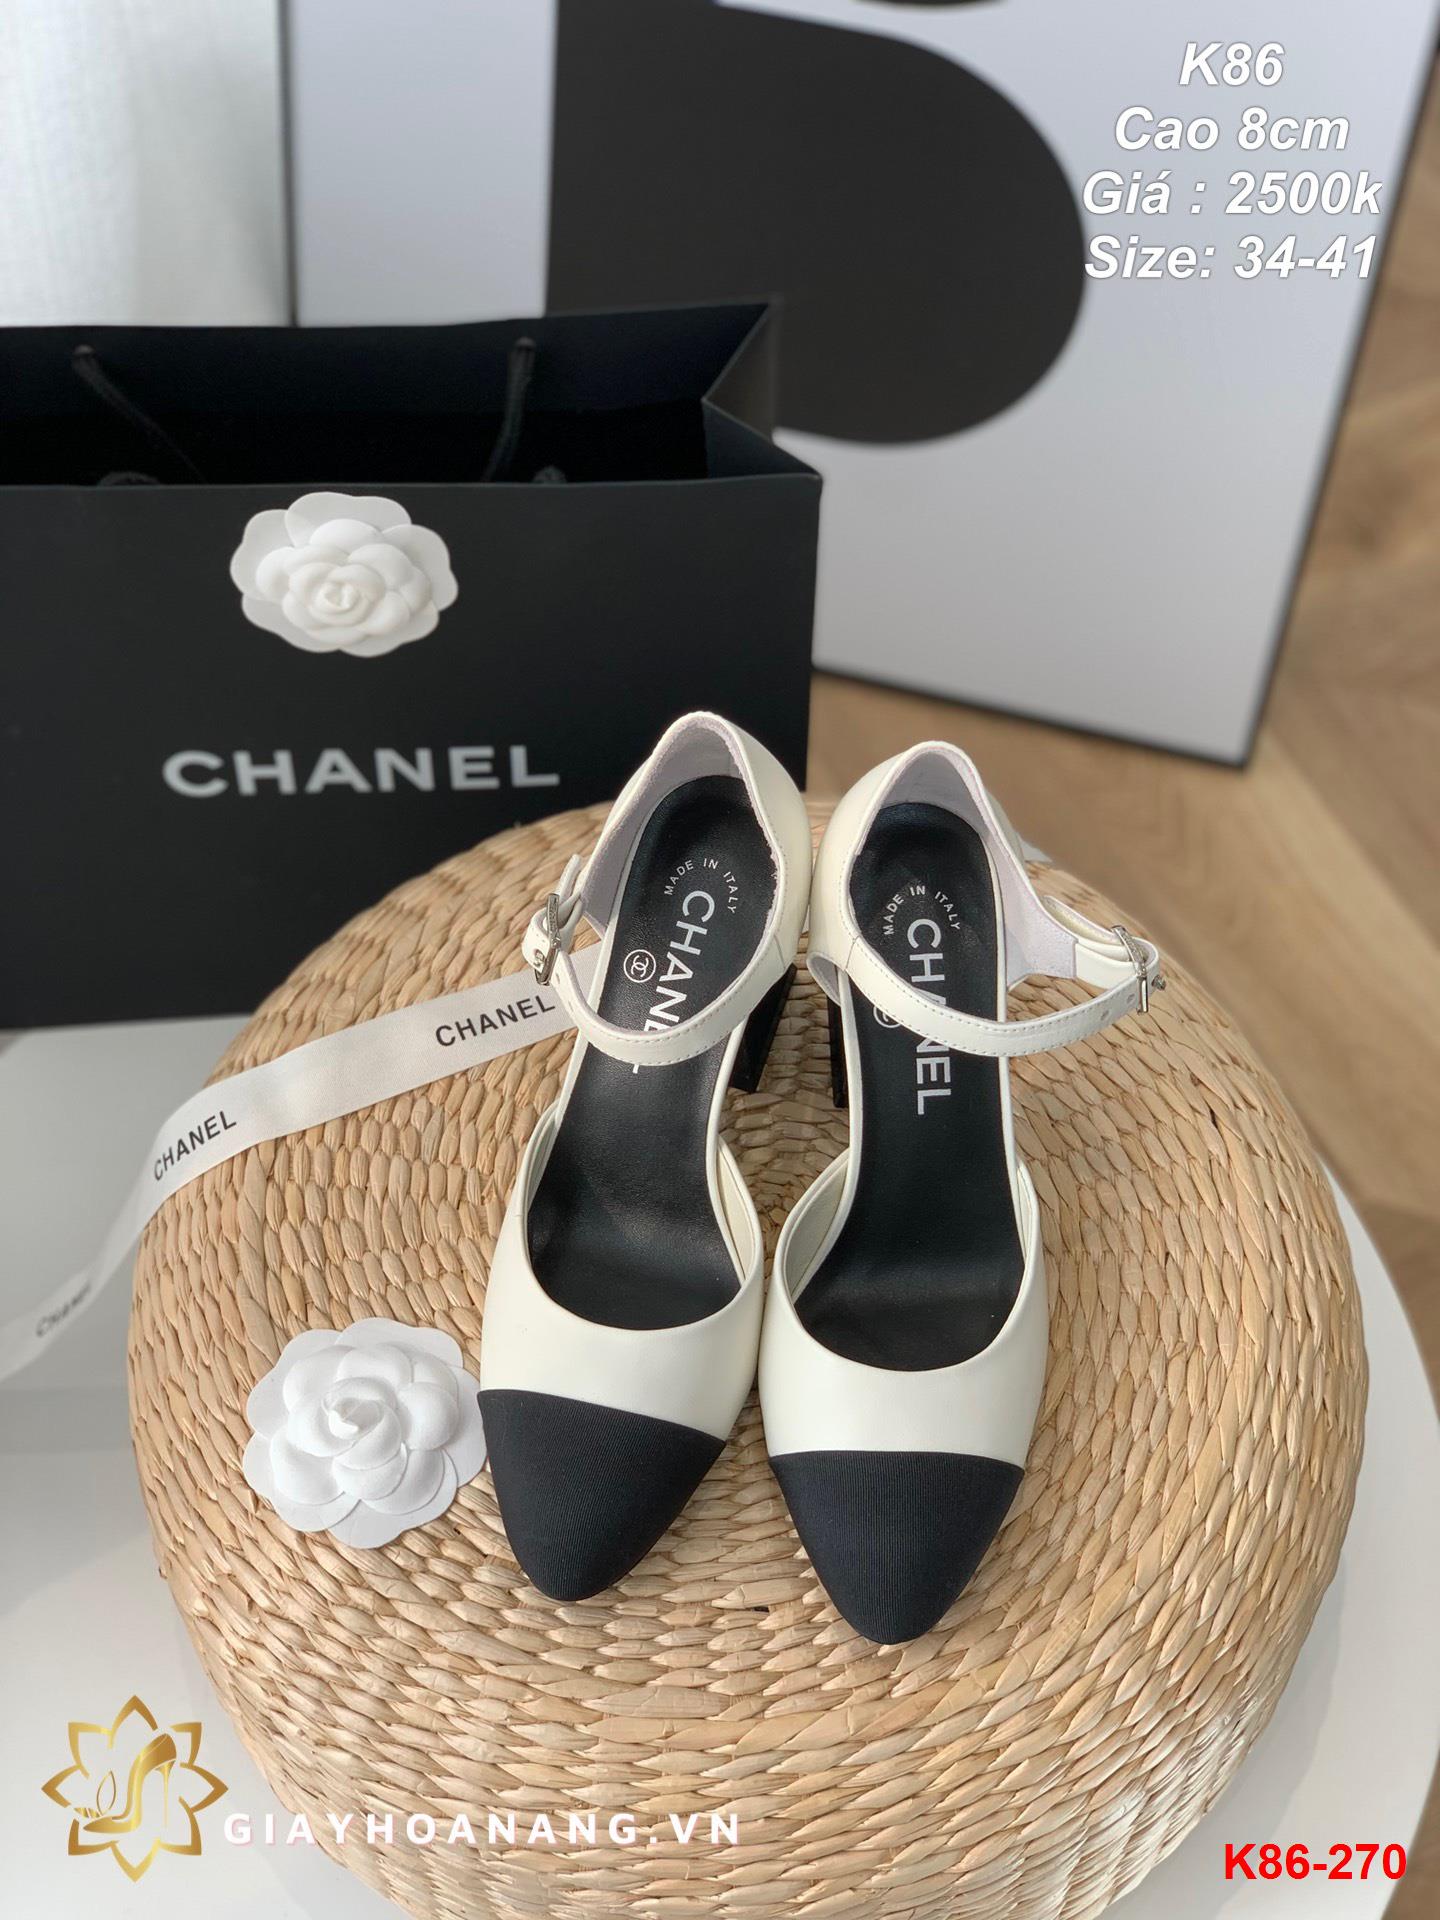 K86-270 Chanel sandal cao 8cm siêu cấp